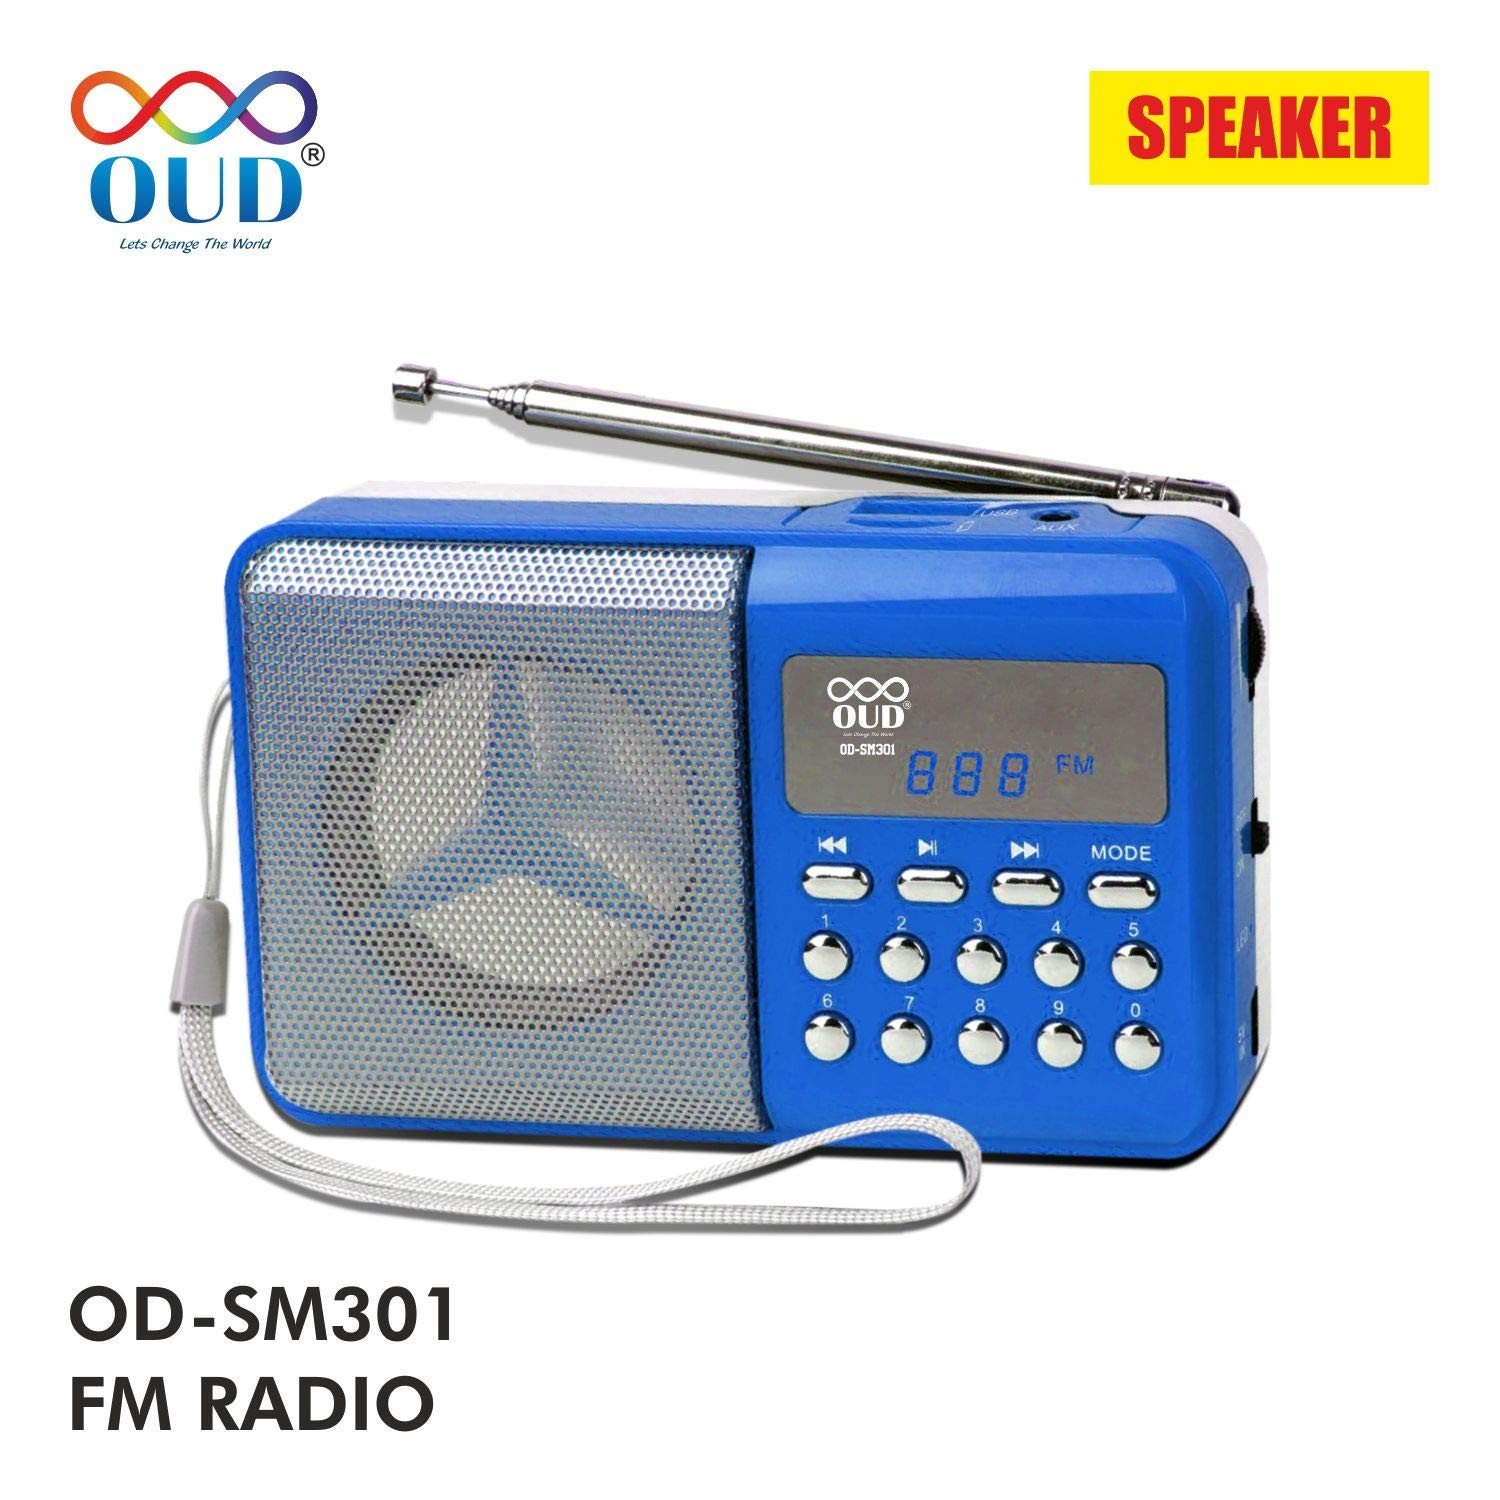 OUD OD-SM301 Fm Radio Dual Speaker Portable Speaker with MP3 TF Memory Card, USB Drive, Earphone Jack, Multimedia Speaker (Random Color)